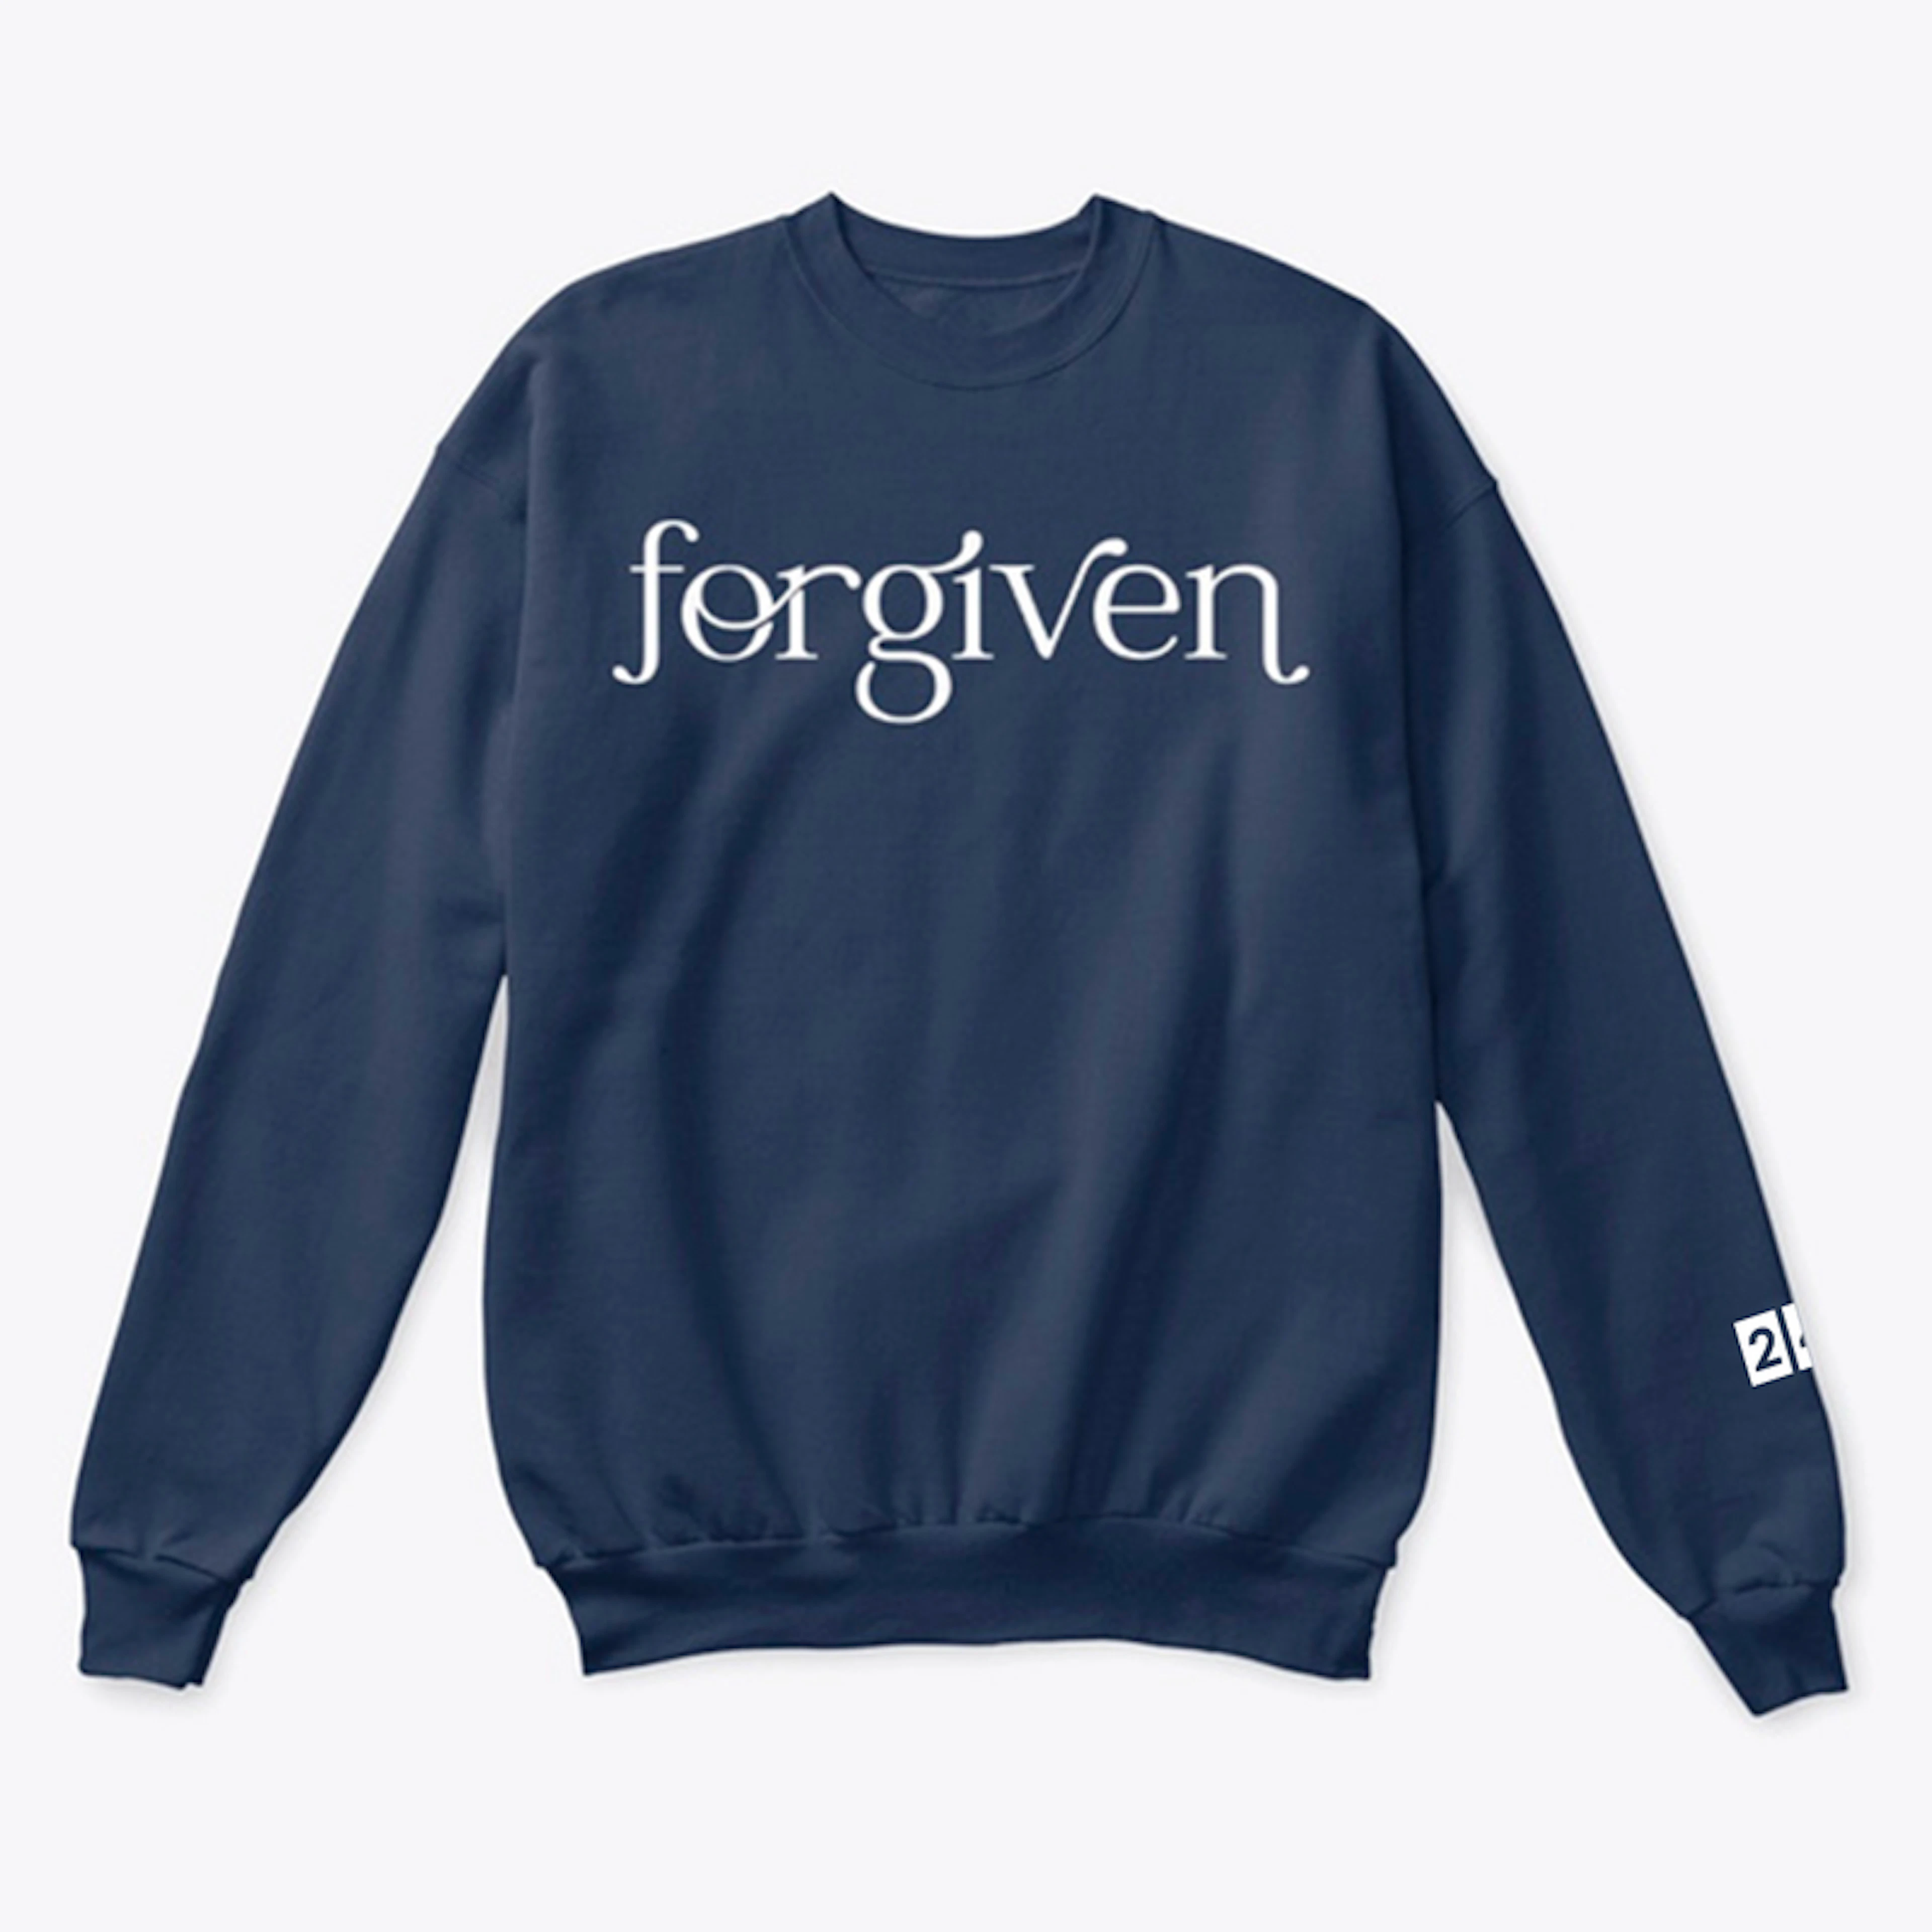 Forgiven - Sweatshirt